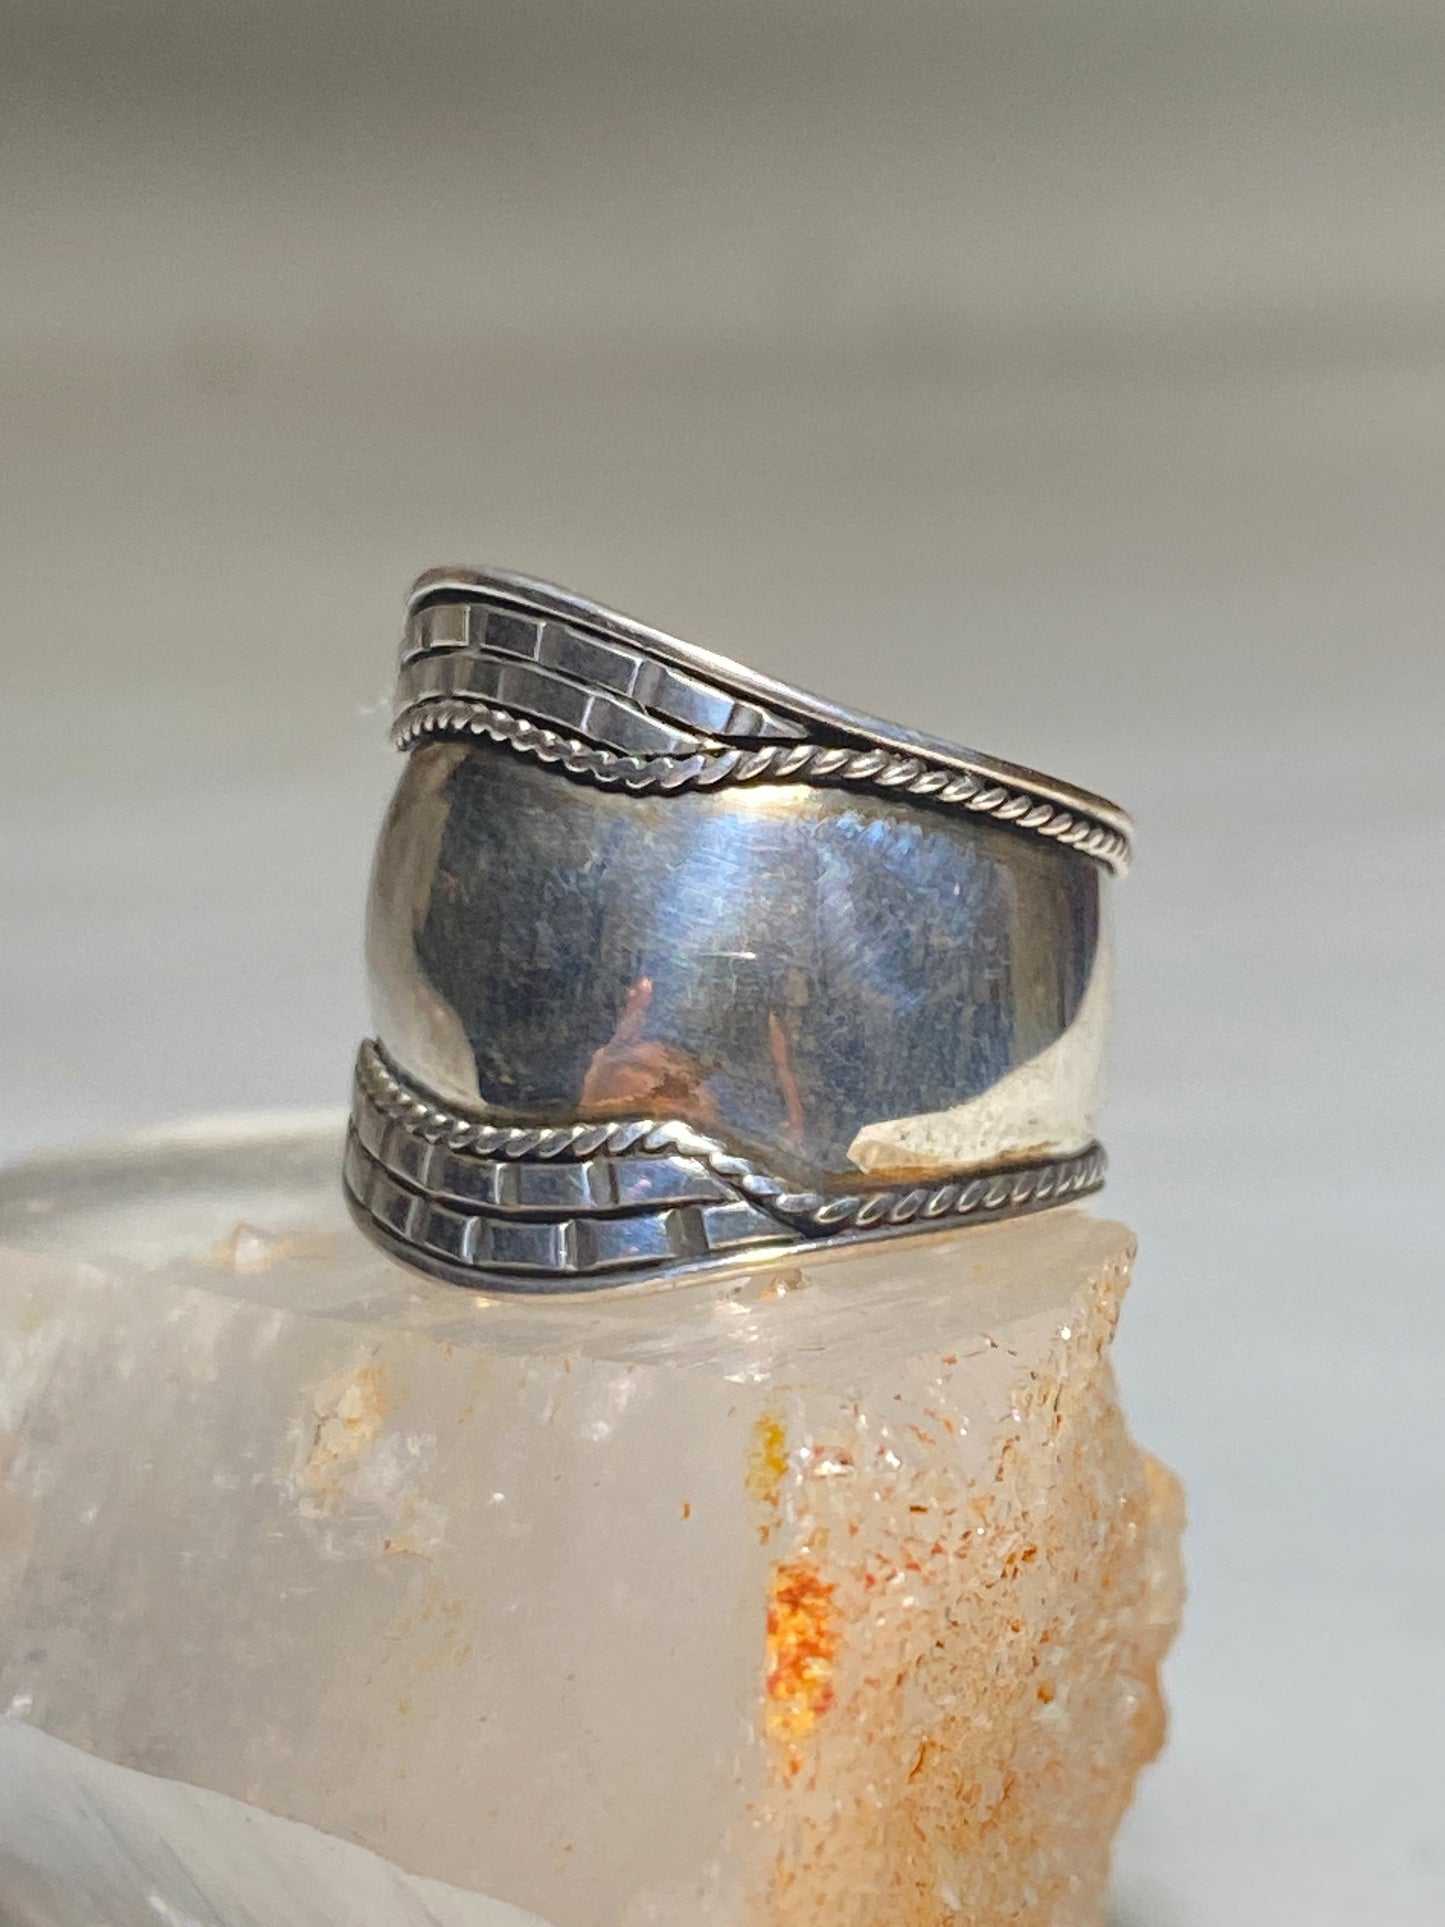 Cigar band size 7.75 brick asymmetrical design ring sterling silver women girls